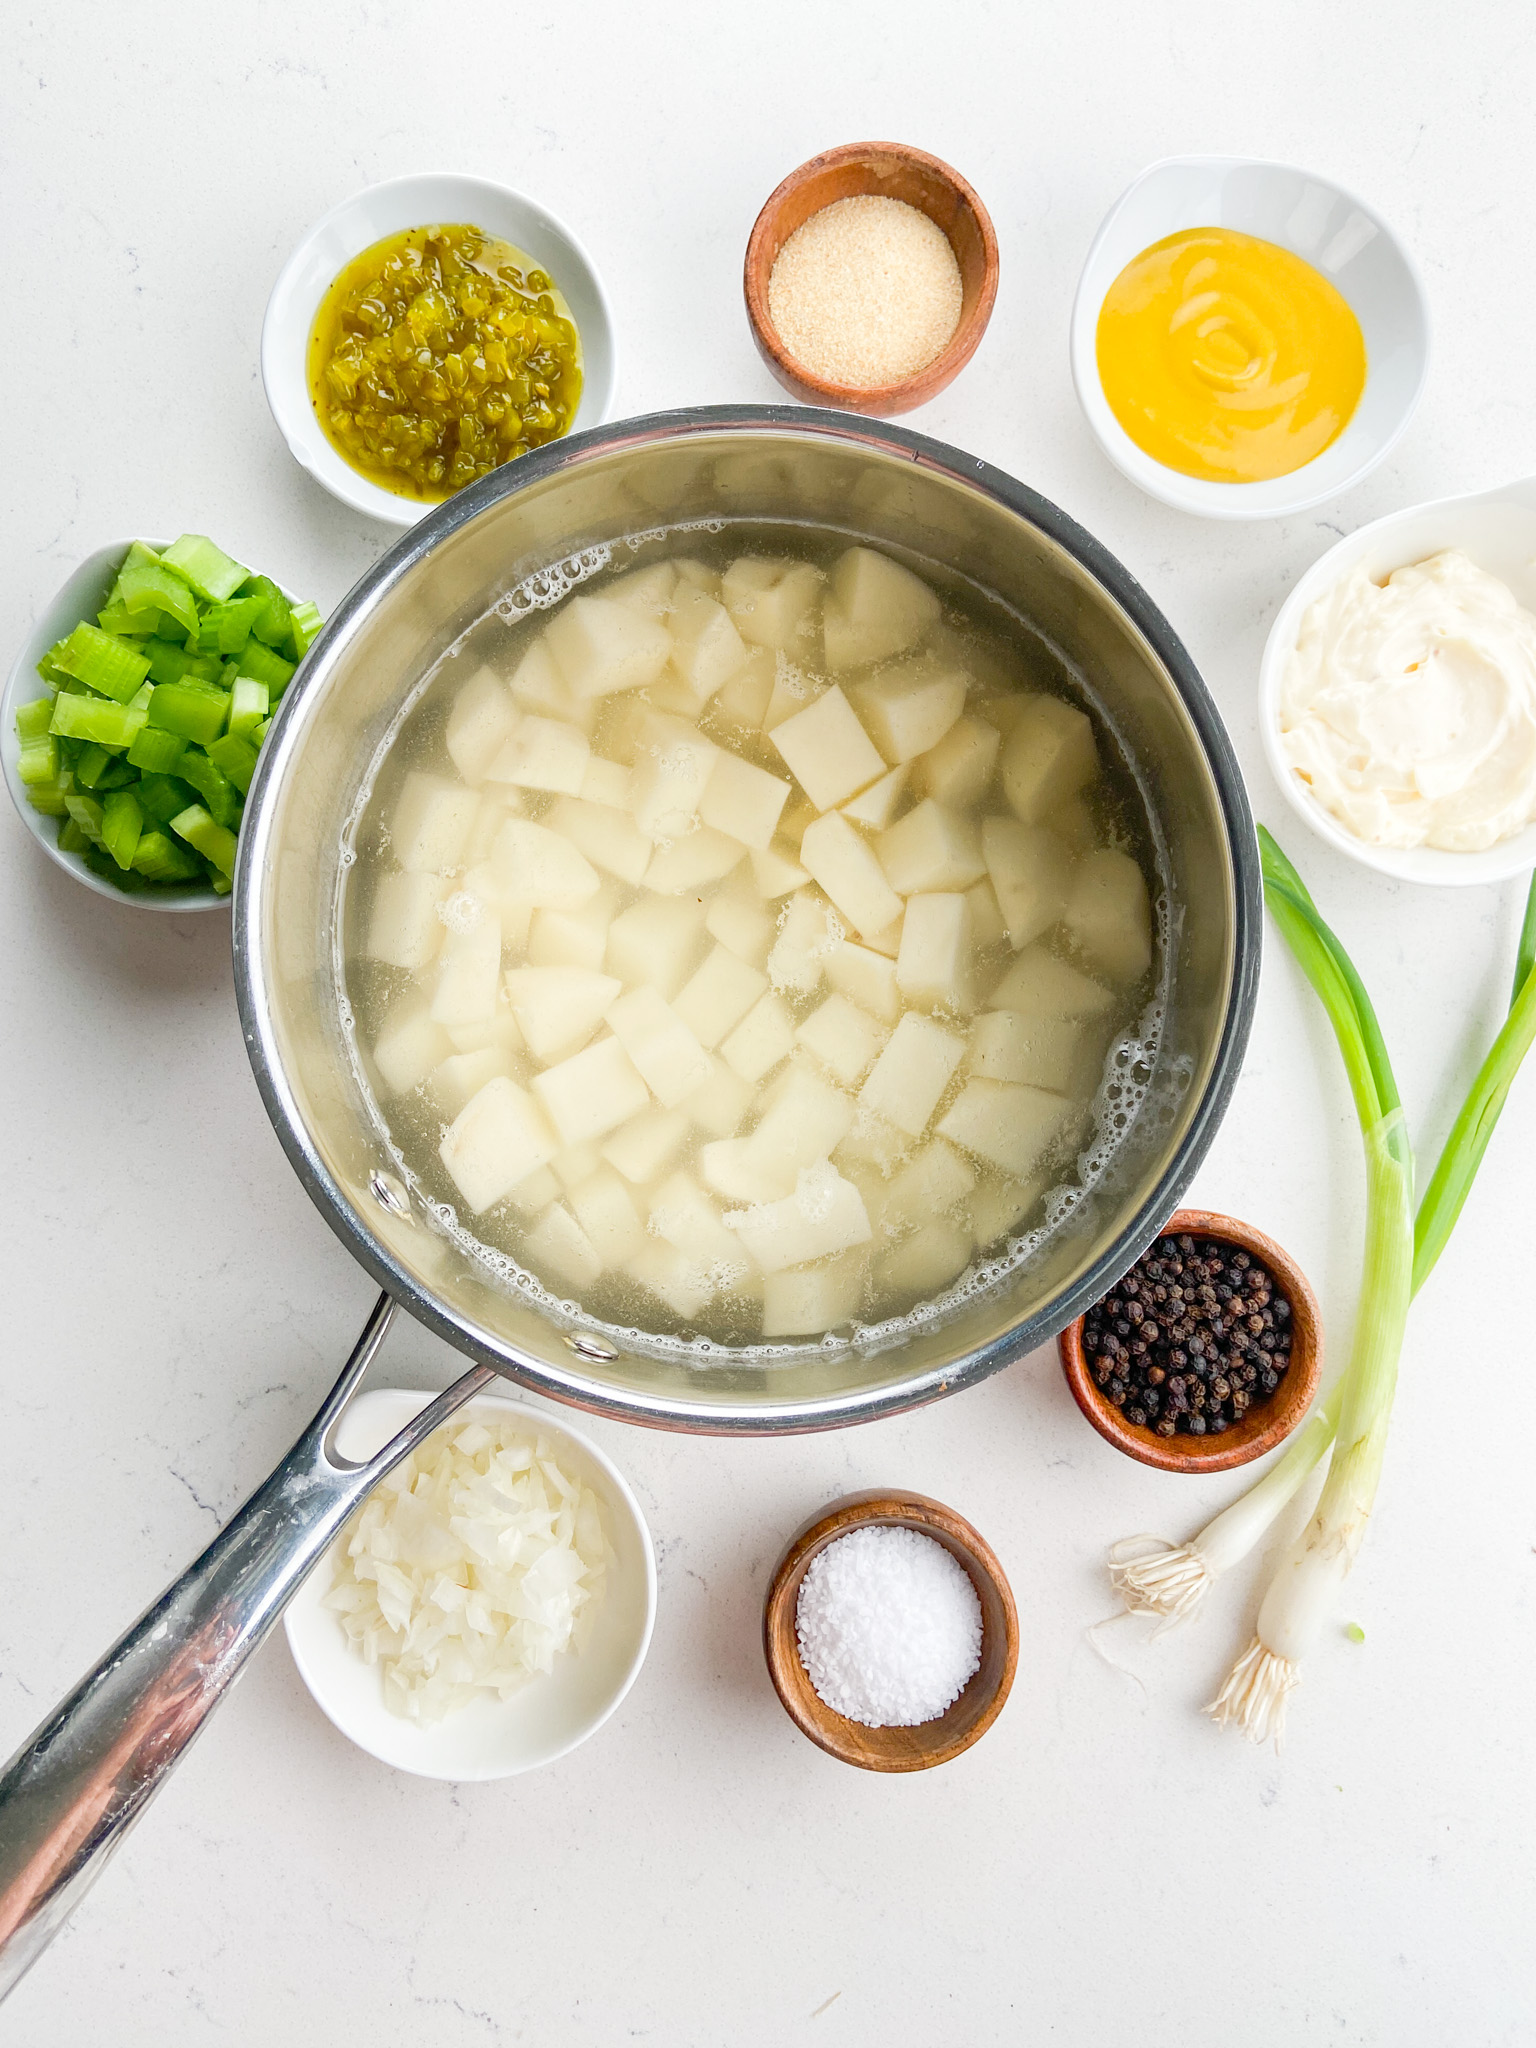 Homemade Classic Potato Salad Recipe - Life's Ambrosia